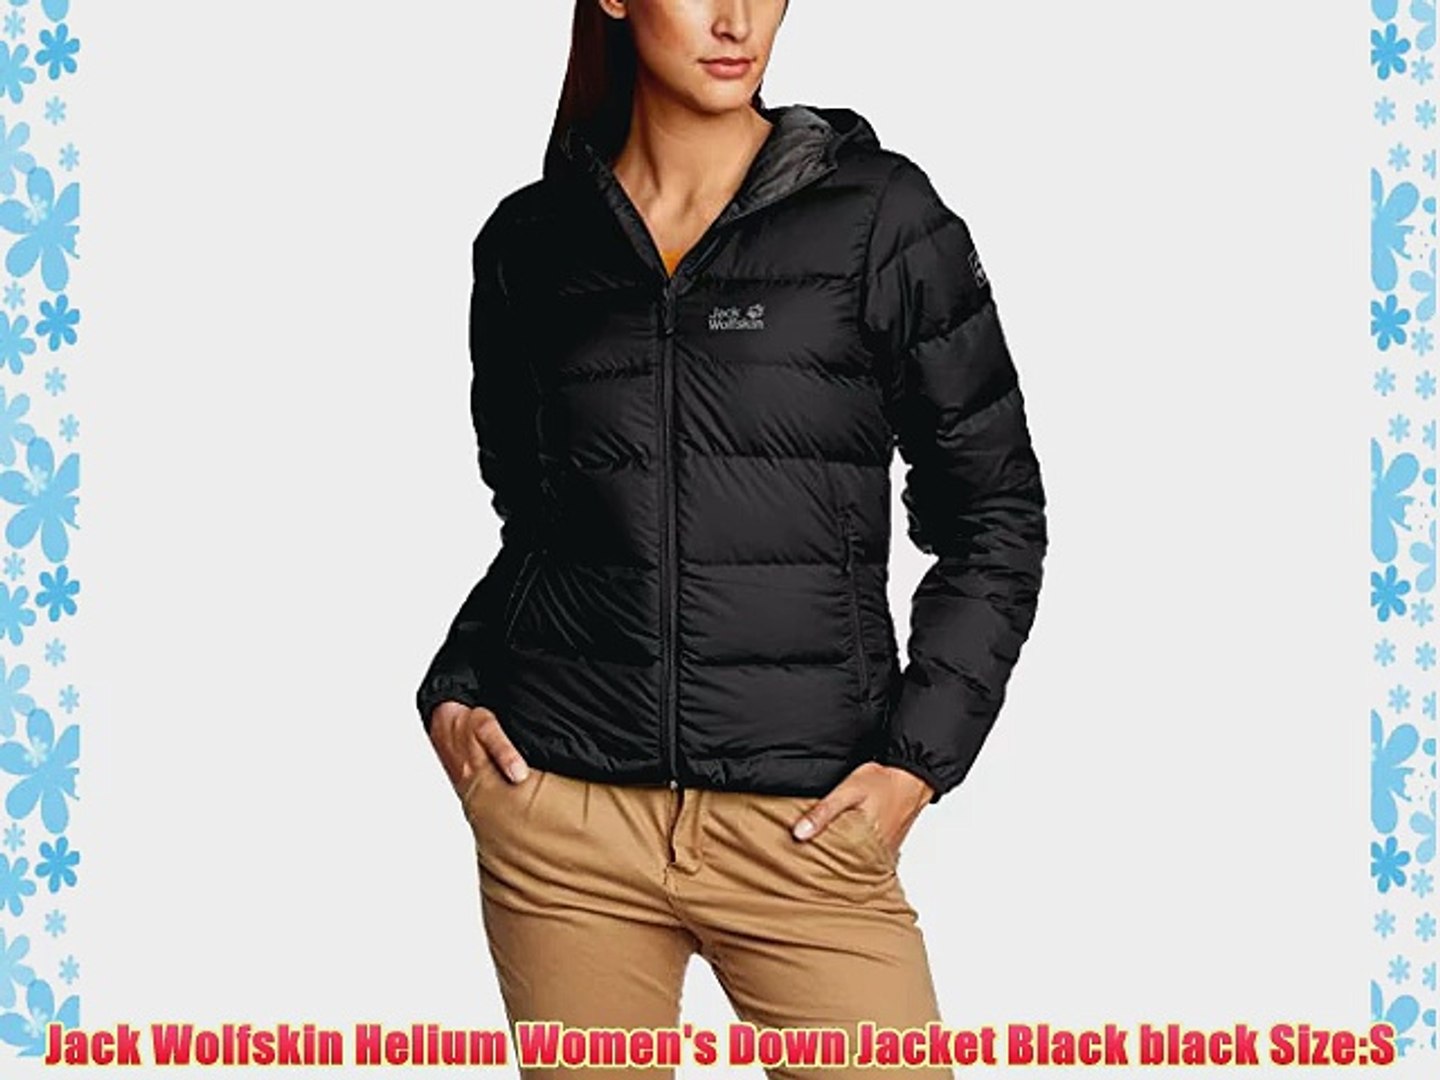 Saga feit Calamiteit Jack Wolfskin Helium Women's Down Jacket Black black Size:S - video  Dailymotion